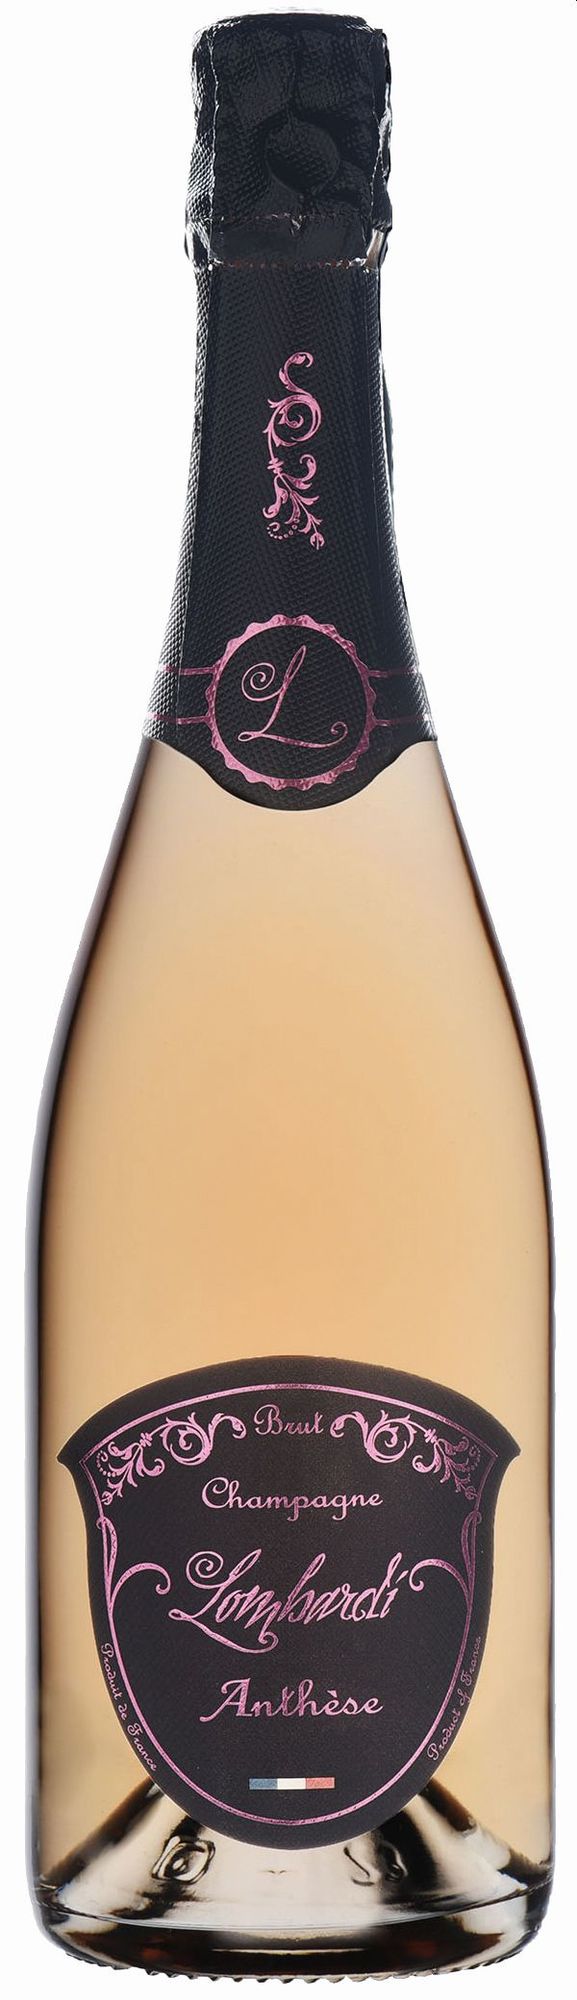 Champagne Lombardi Anthèse Cuvée Rosé Brut Champagner, 0,75Ltr